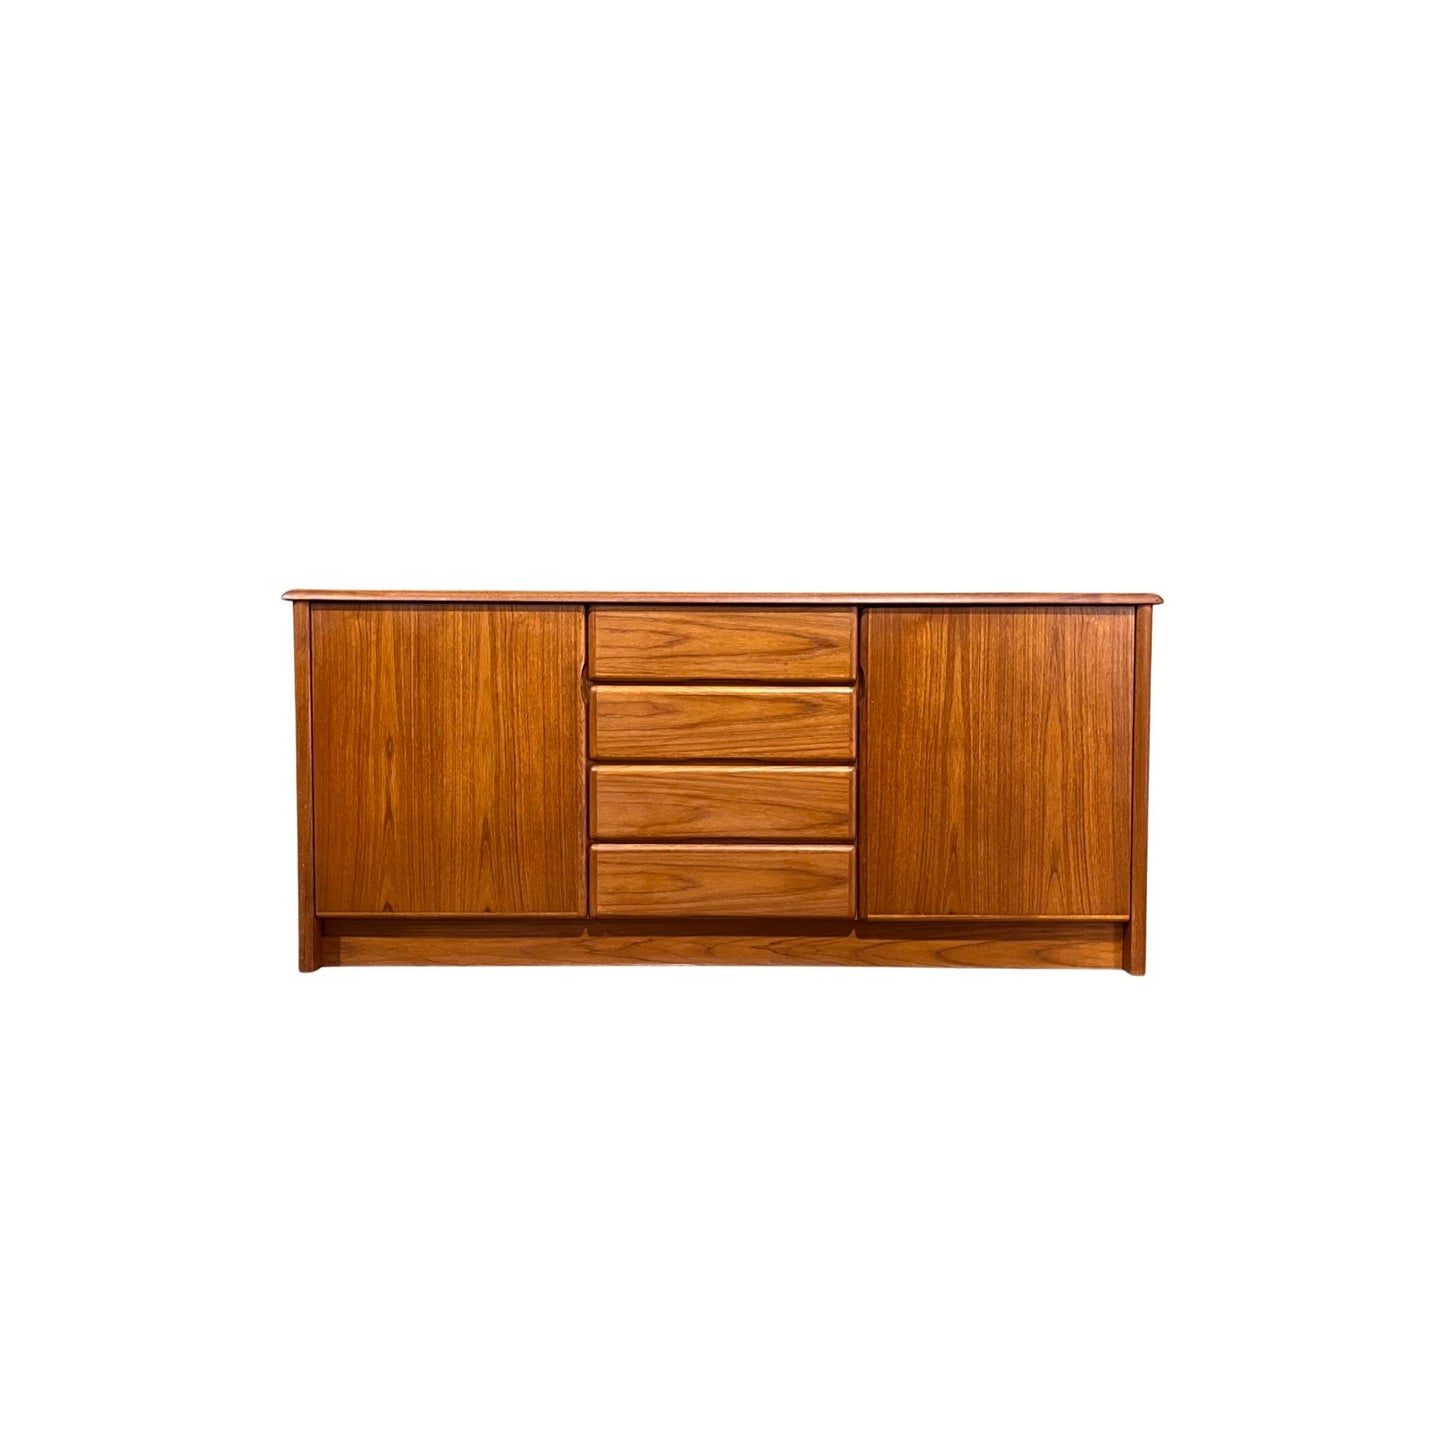 Nordic Furniture Danish Modern Teak Sideboard Credenza